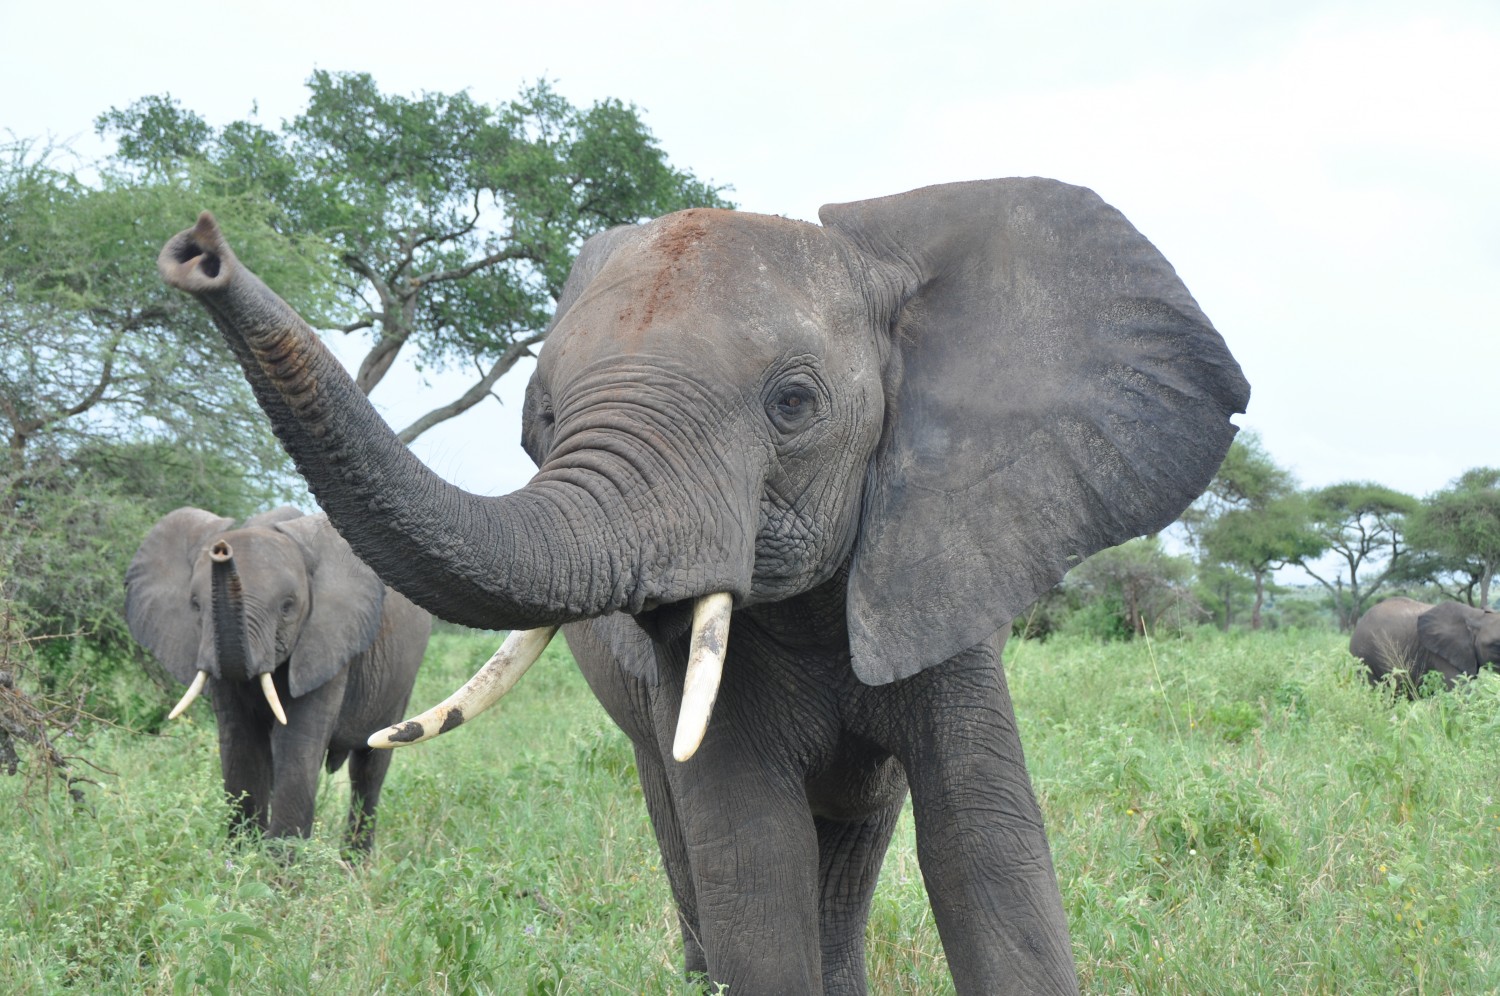 Elephant lifting its trunk